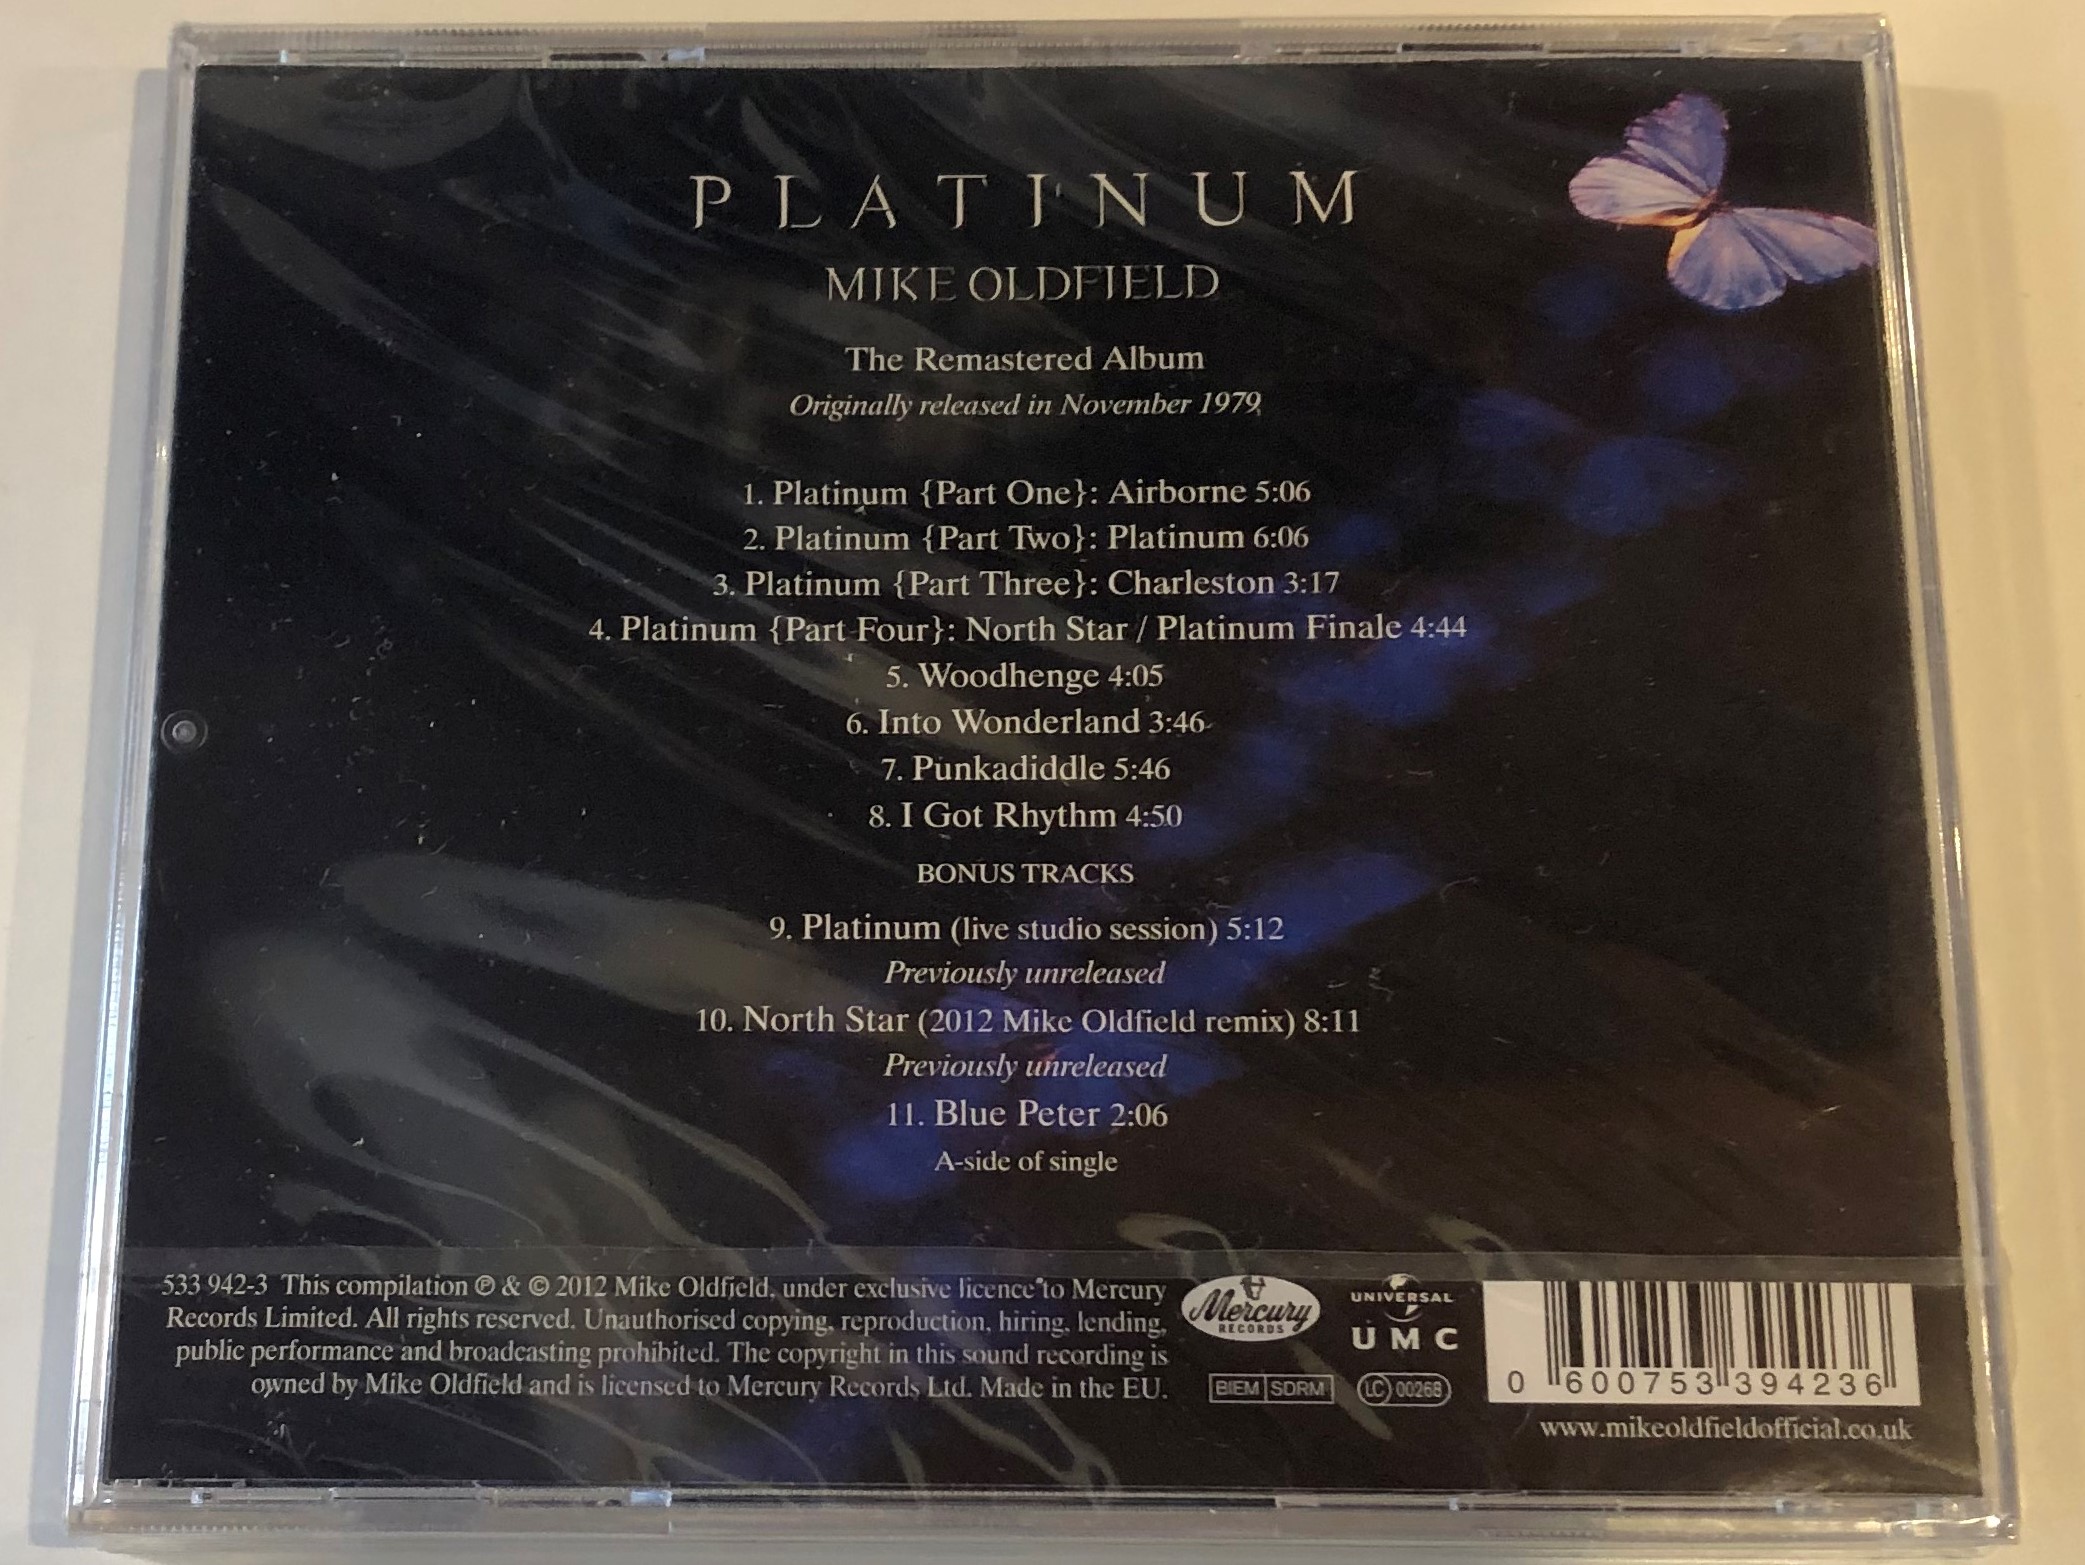 mike-oldfield-platinum-new-2012-stereo-remaster-universal-umc-audio-cd-2012-stereo-533-942-3-2-.jpg